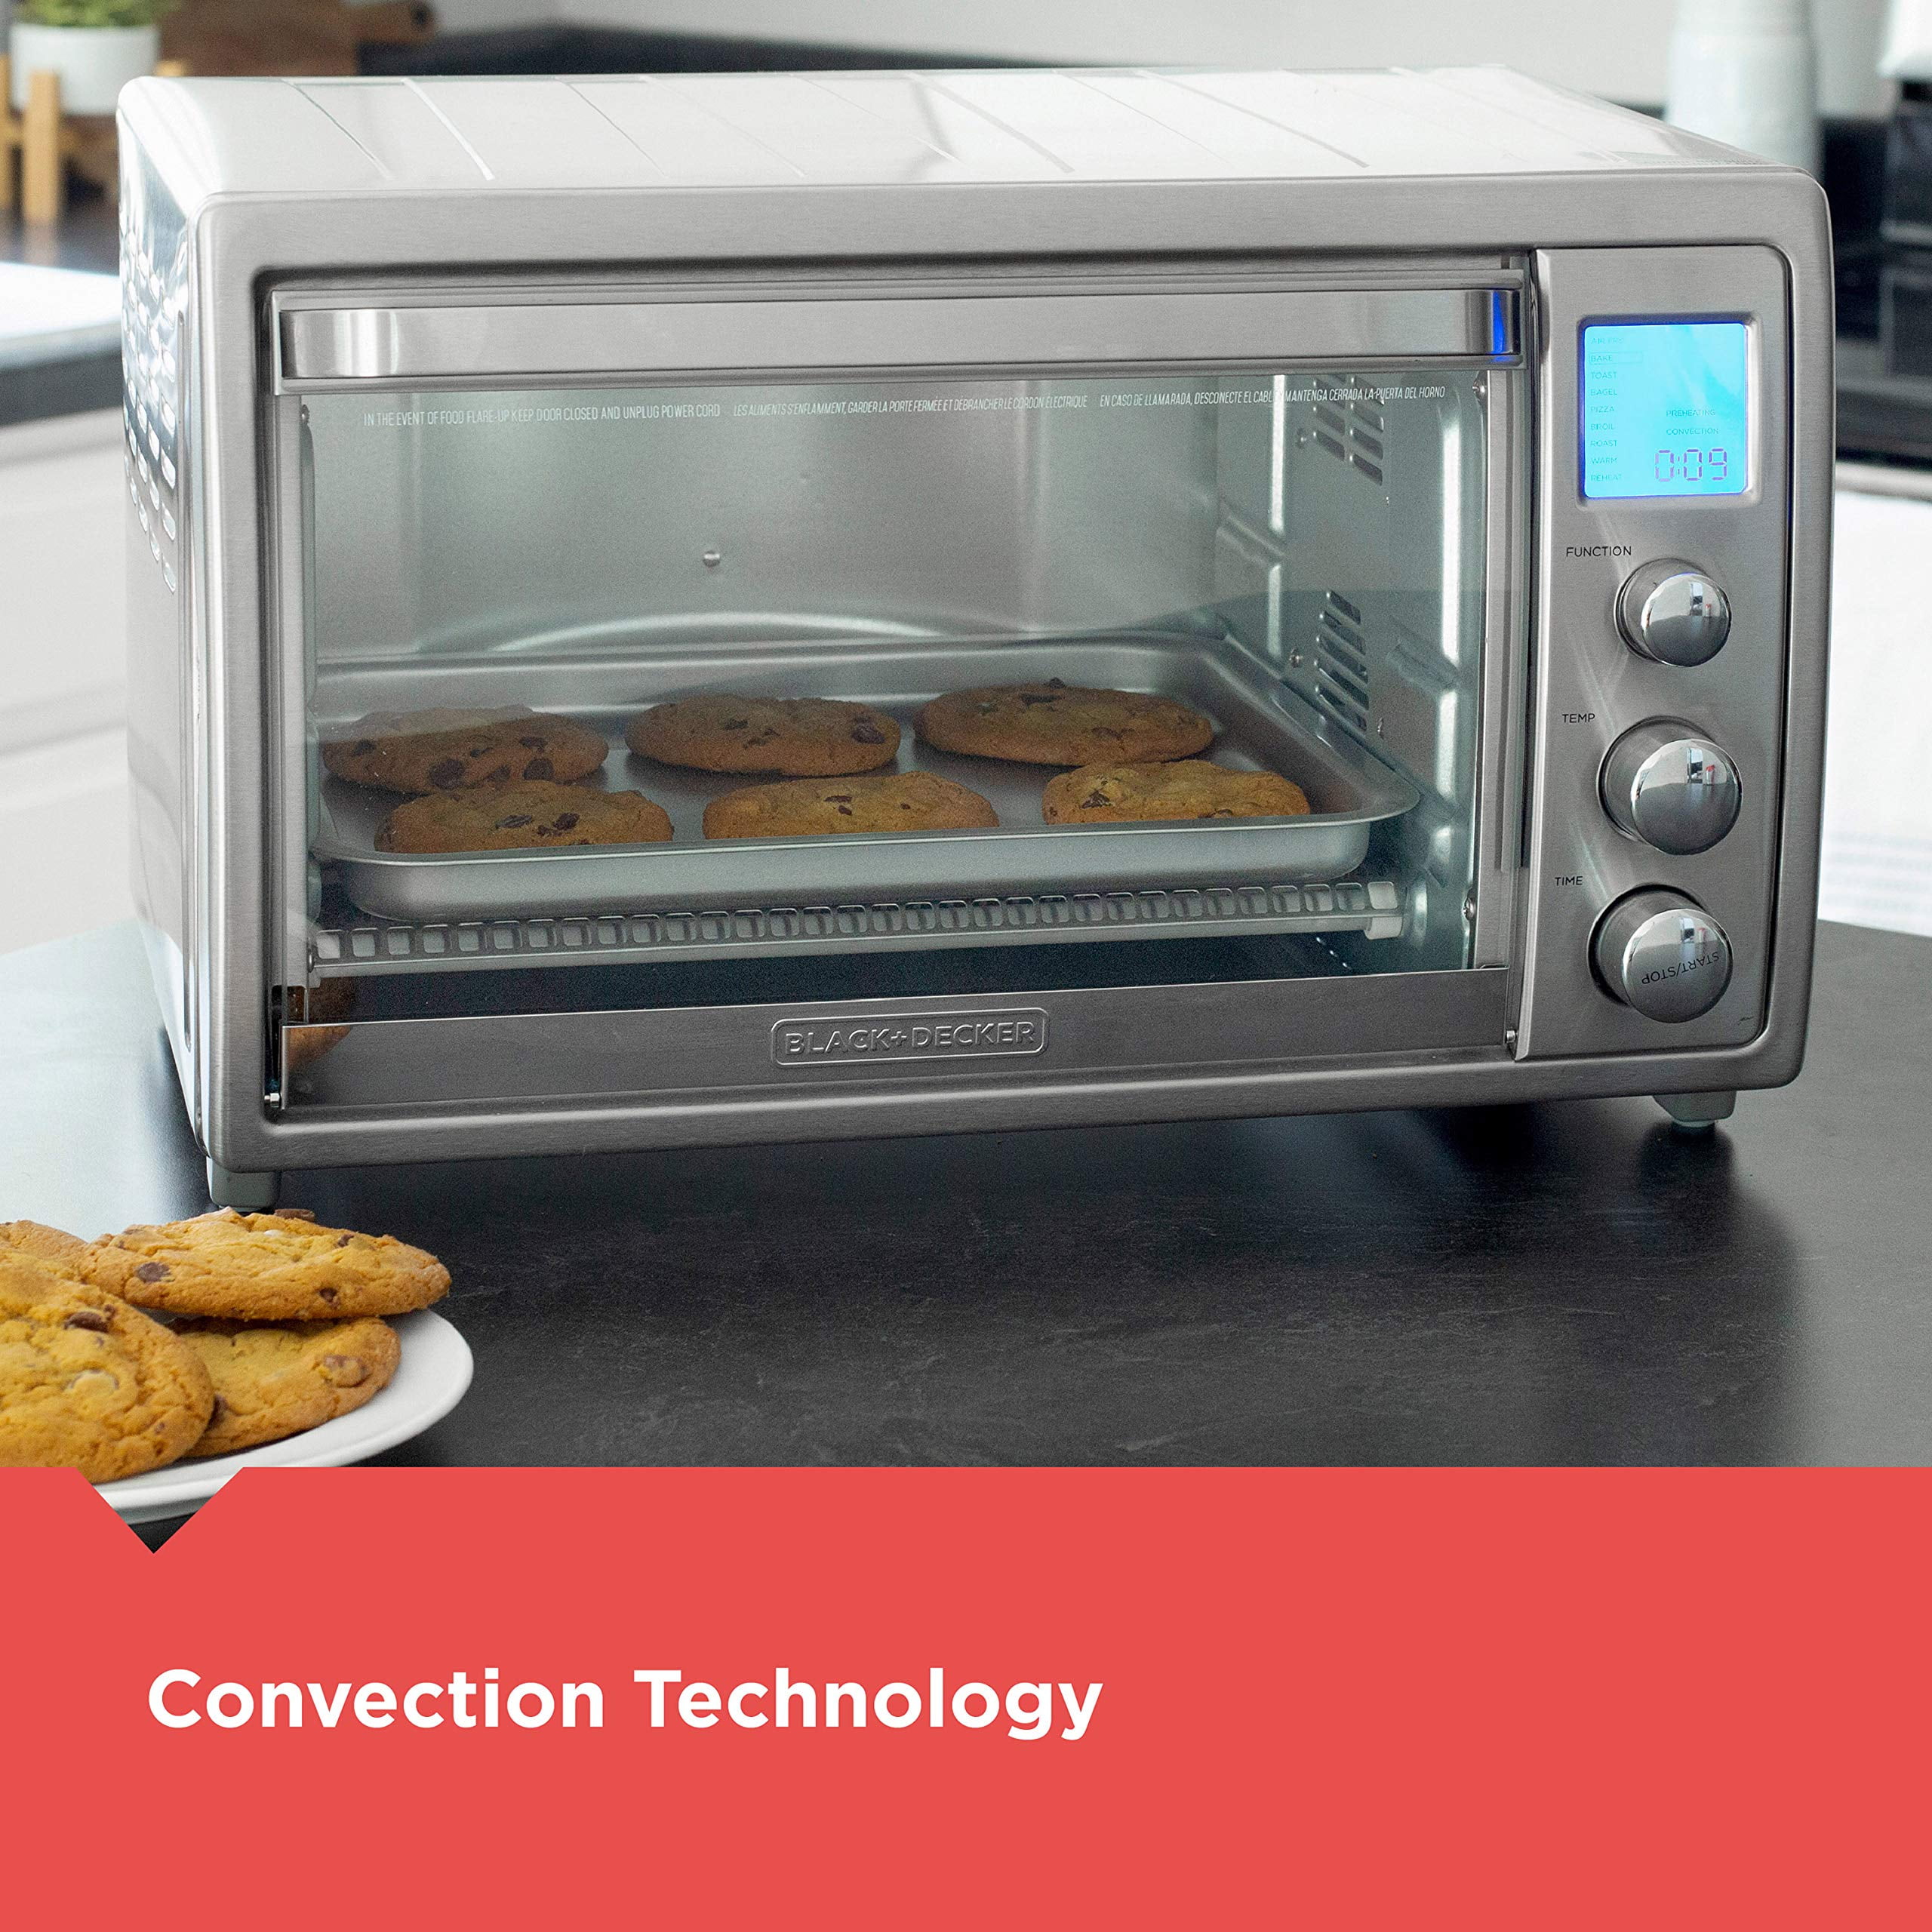 BLACK+DECKER™ Crisp'N Bake Air Fry Countertop Oven with No Preheat